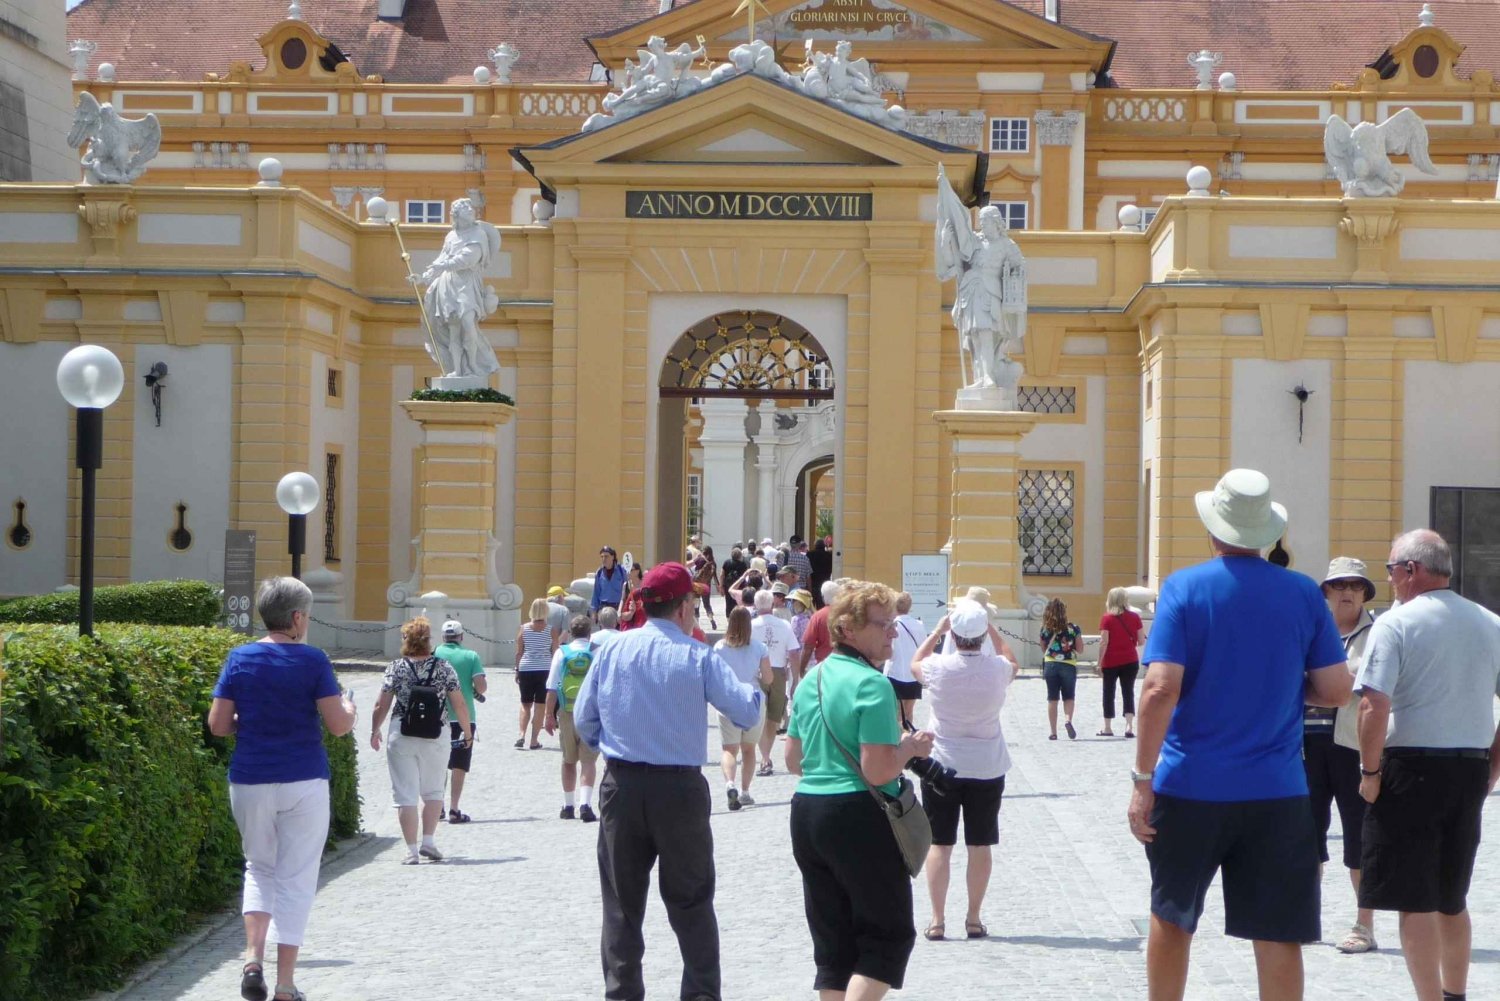 Vienna: Melk Abbey, Wachau, Danube Valley Private Trip